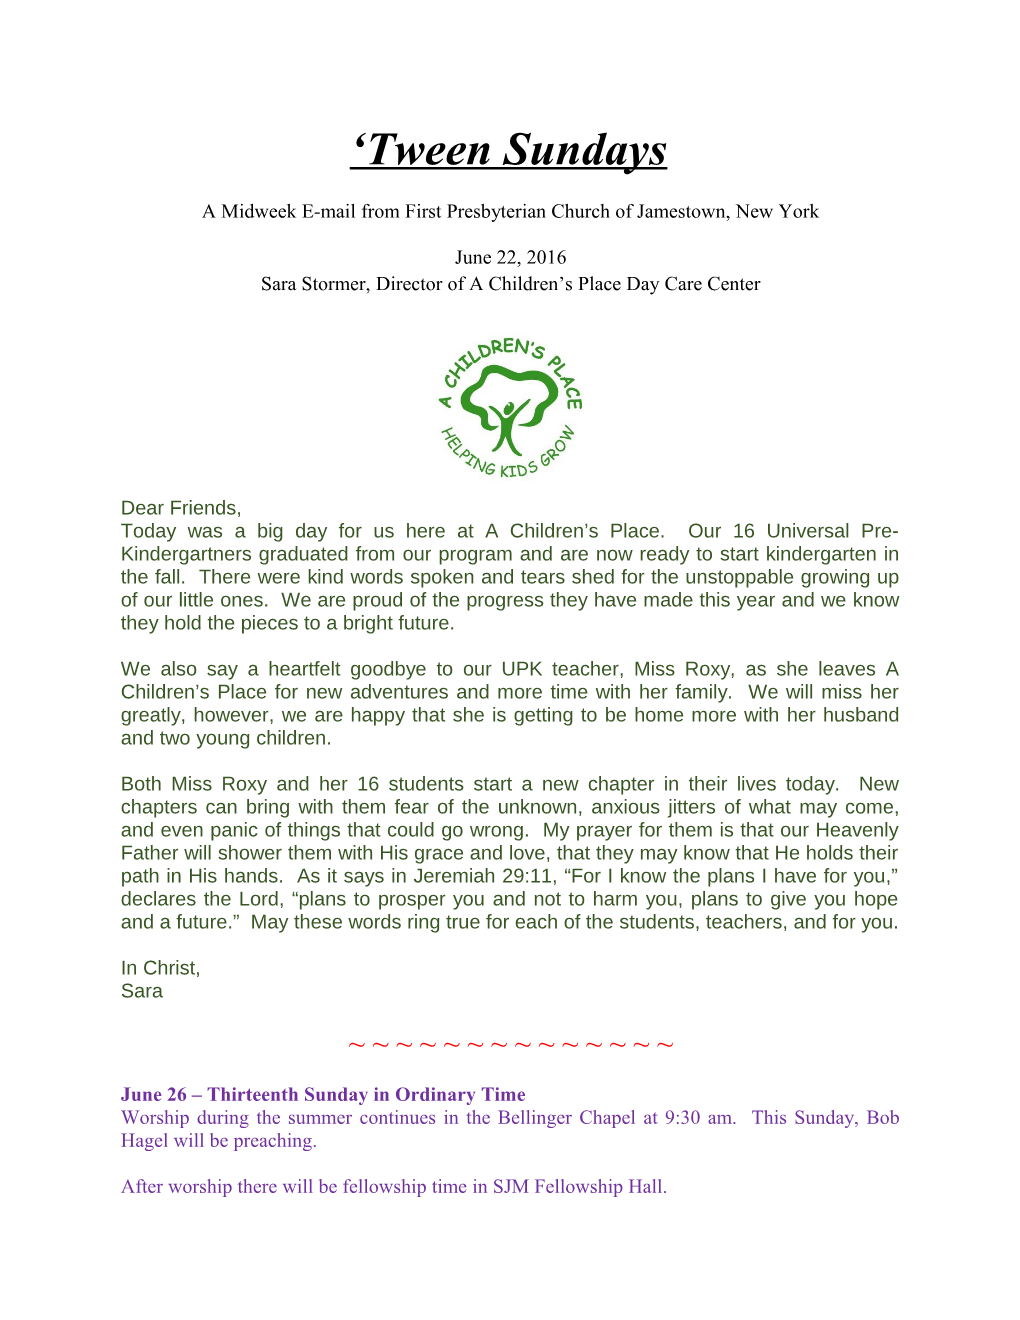 A Midweek E-Mail from First Presbyterian Church of Jamestown, New York